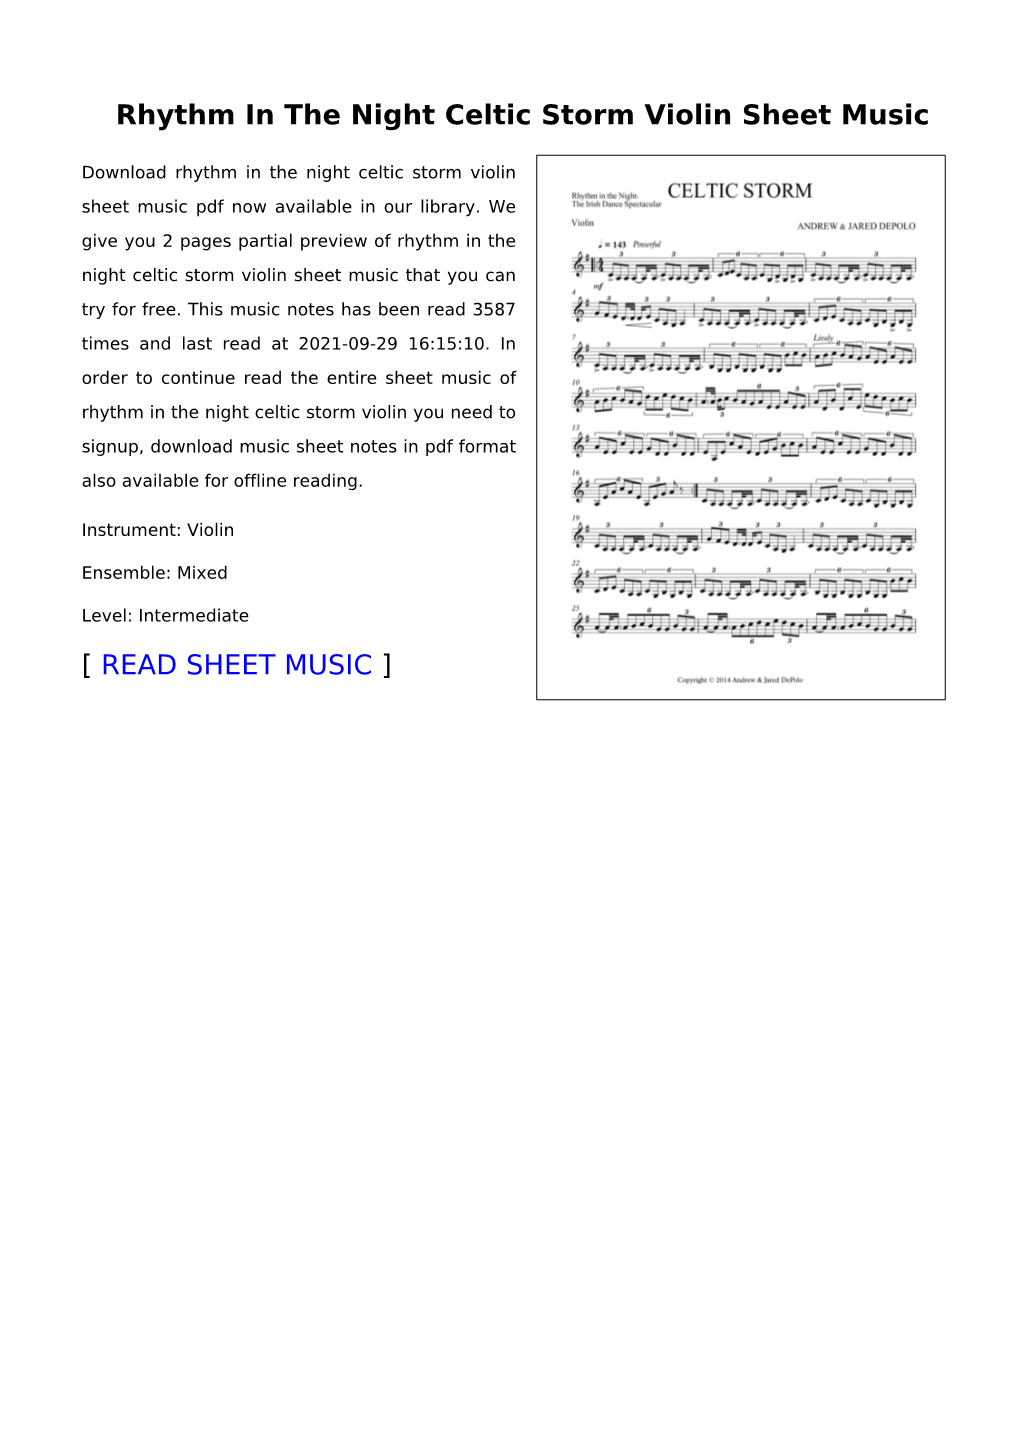 Rhythm in the Night Celtic Storm Violin Sheet Music